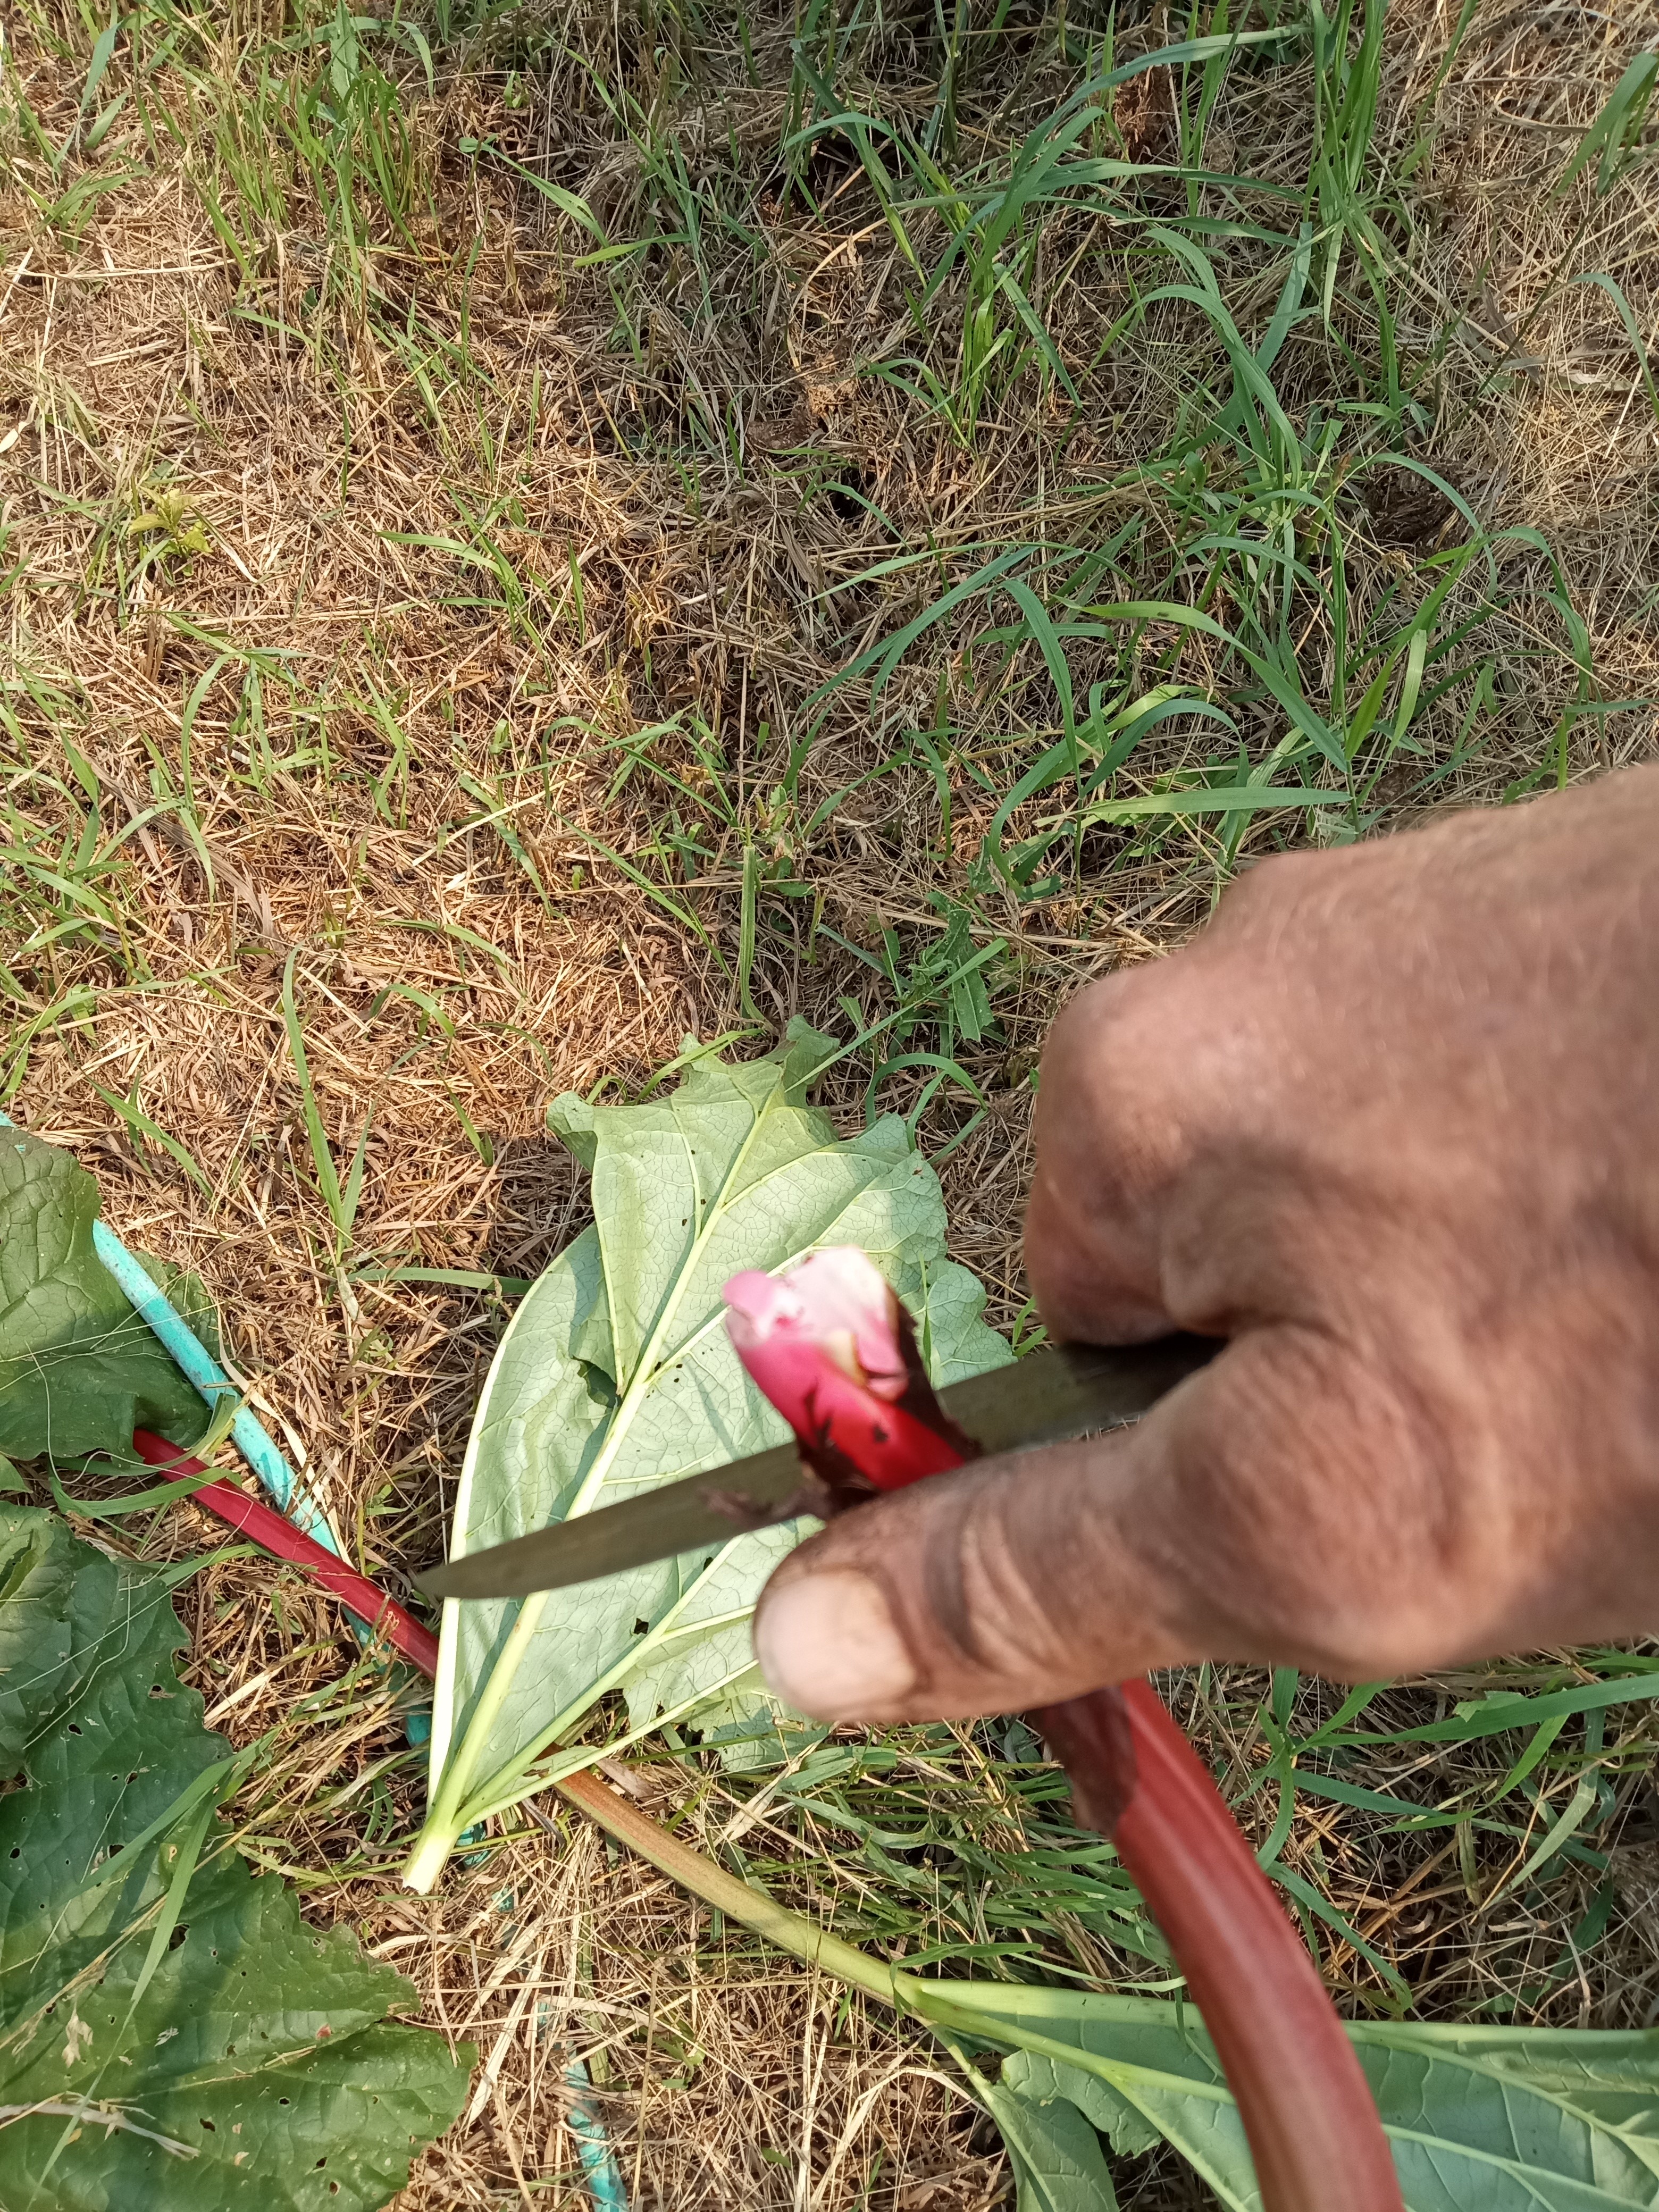 Harvesting rhubarb - removing root end